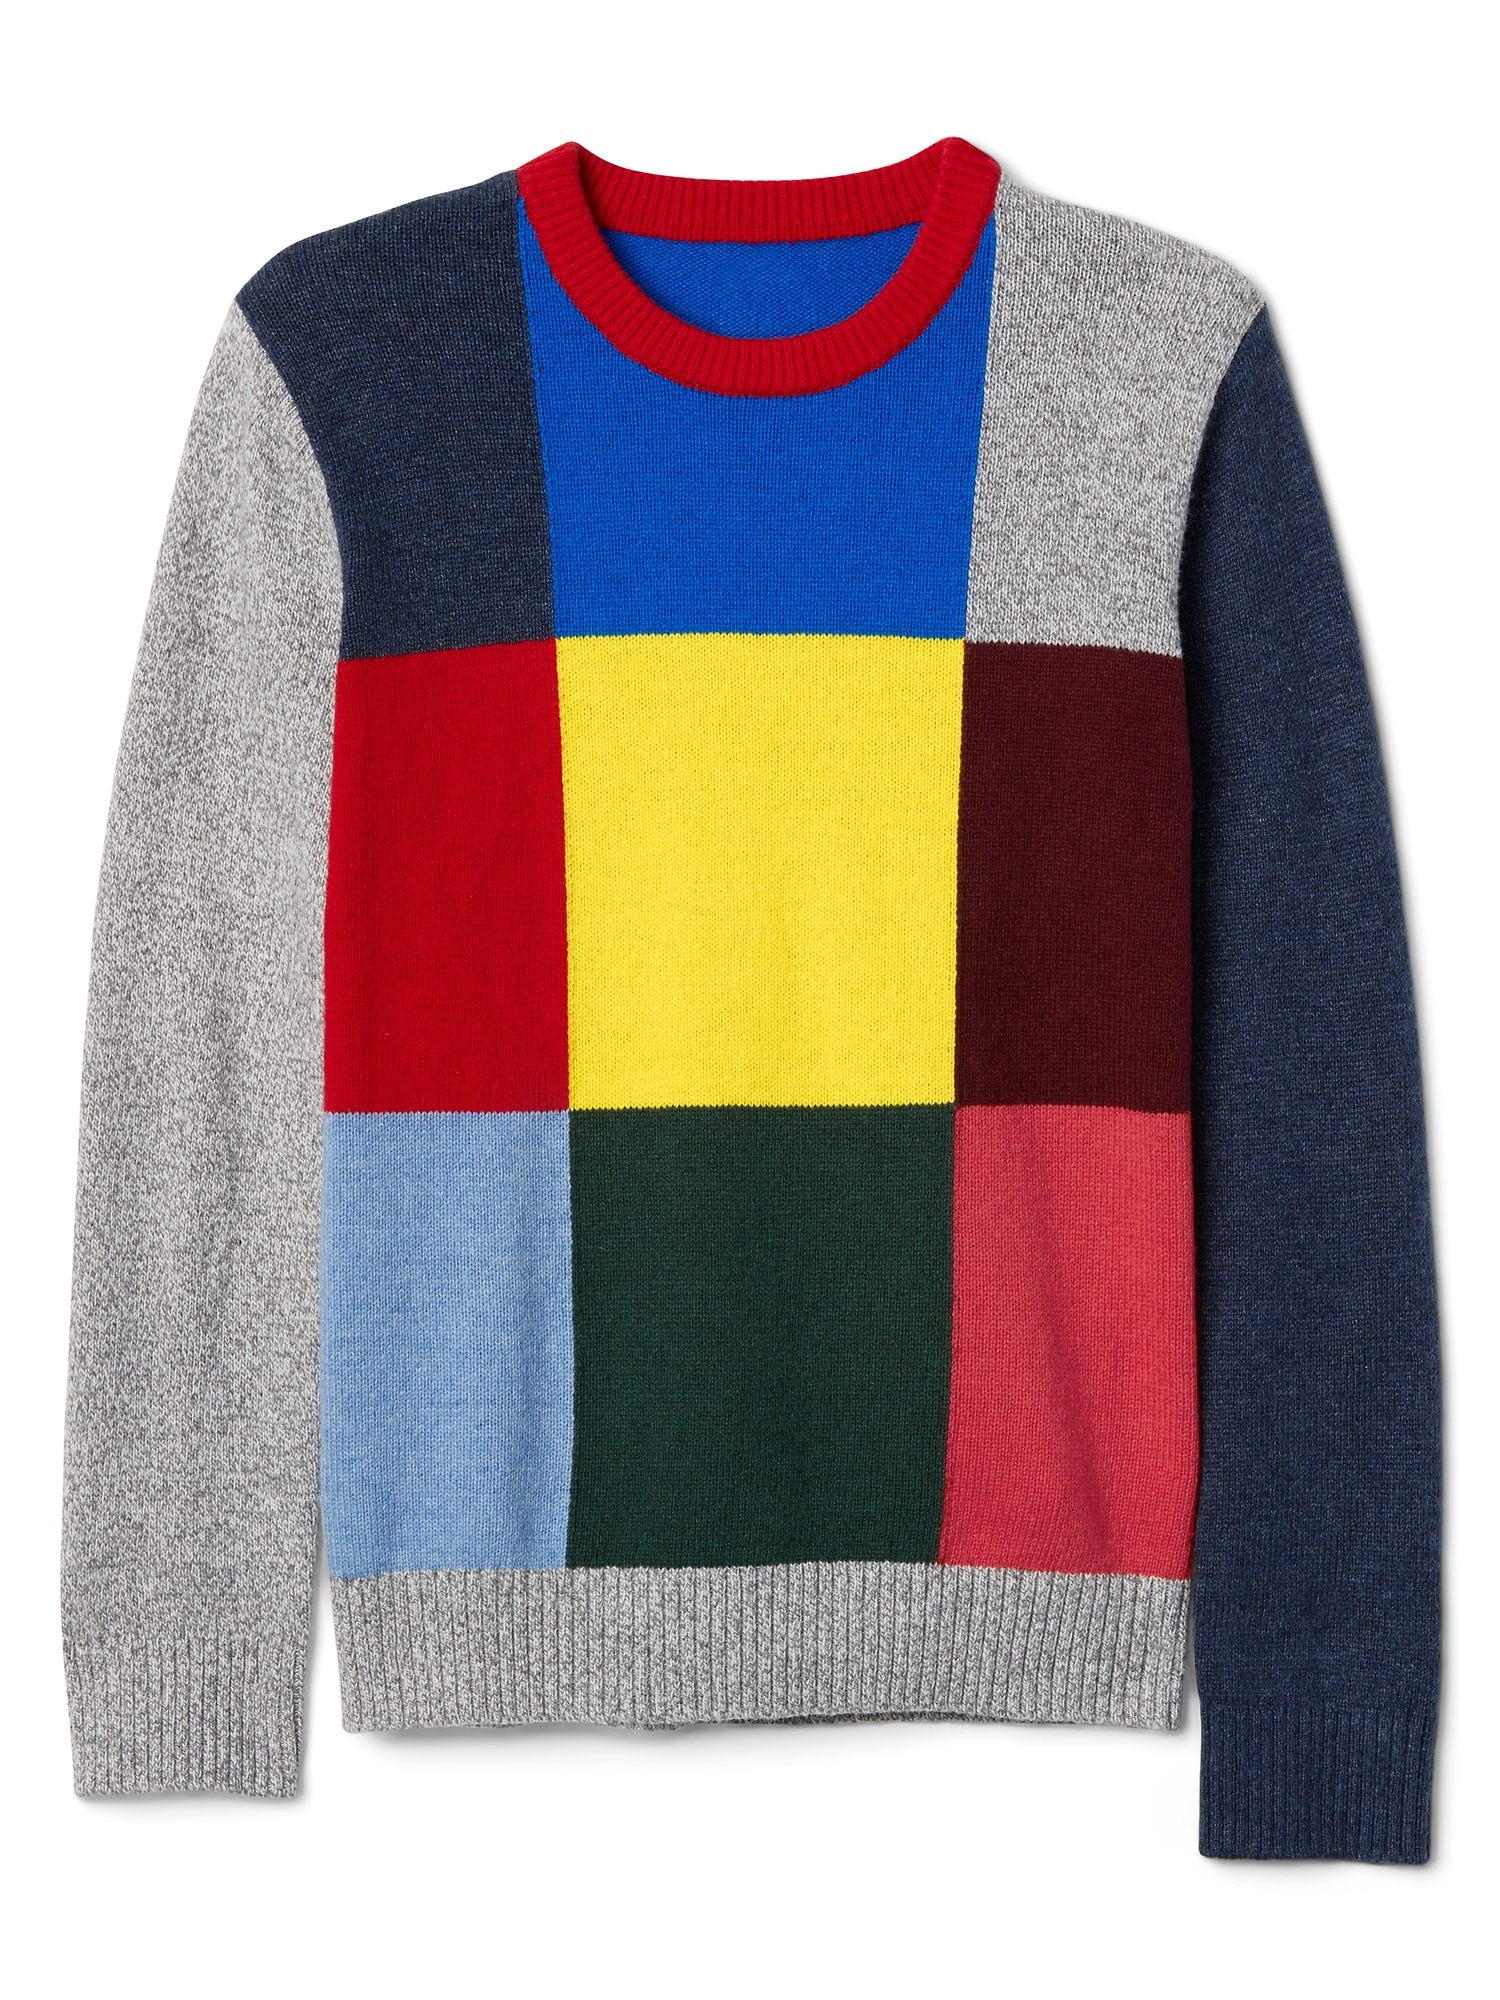 Crazy block sweater | Gap